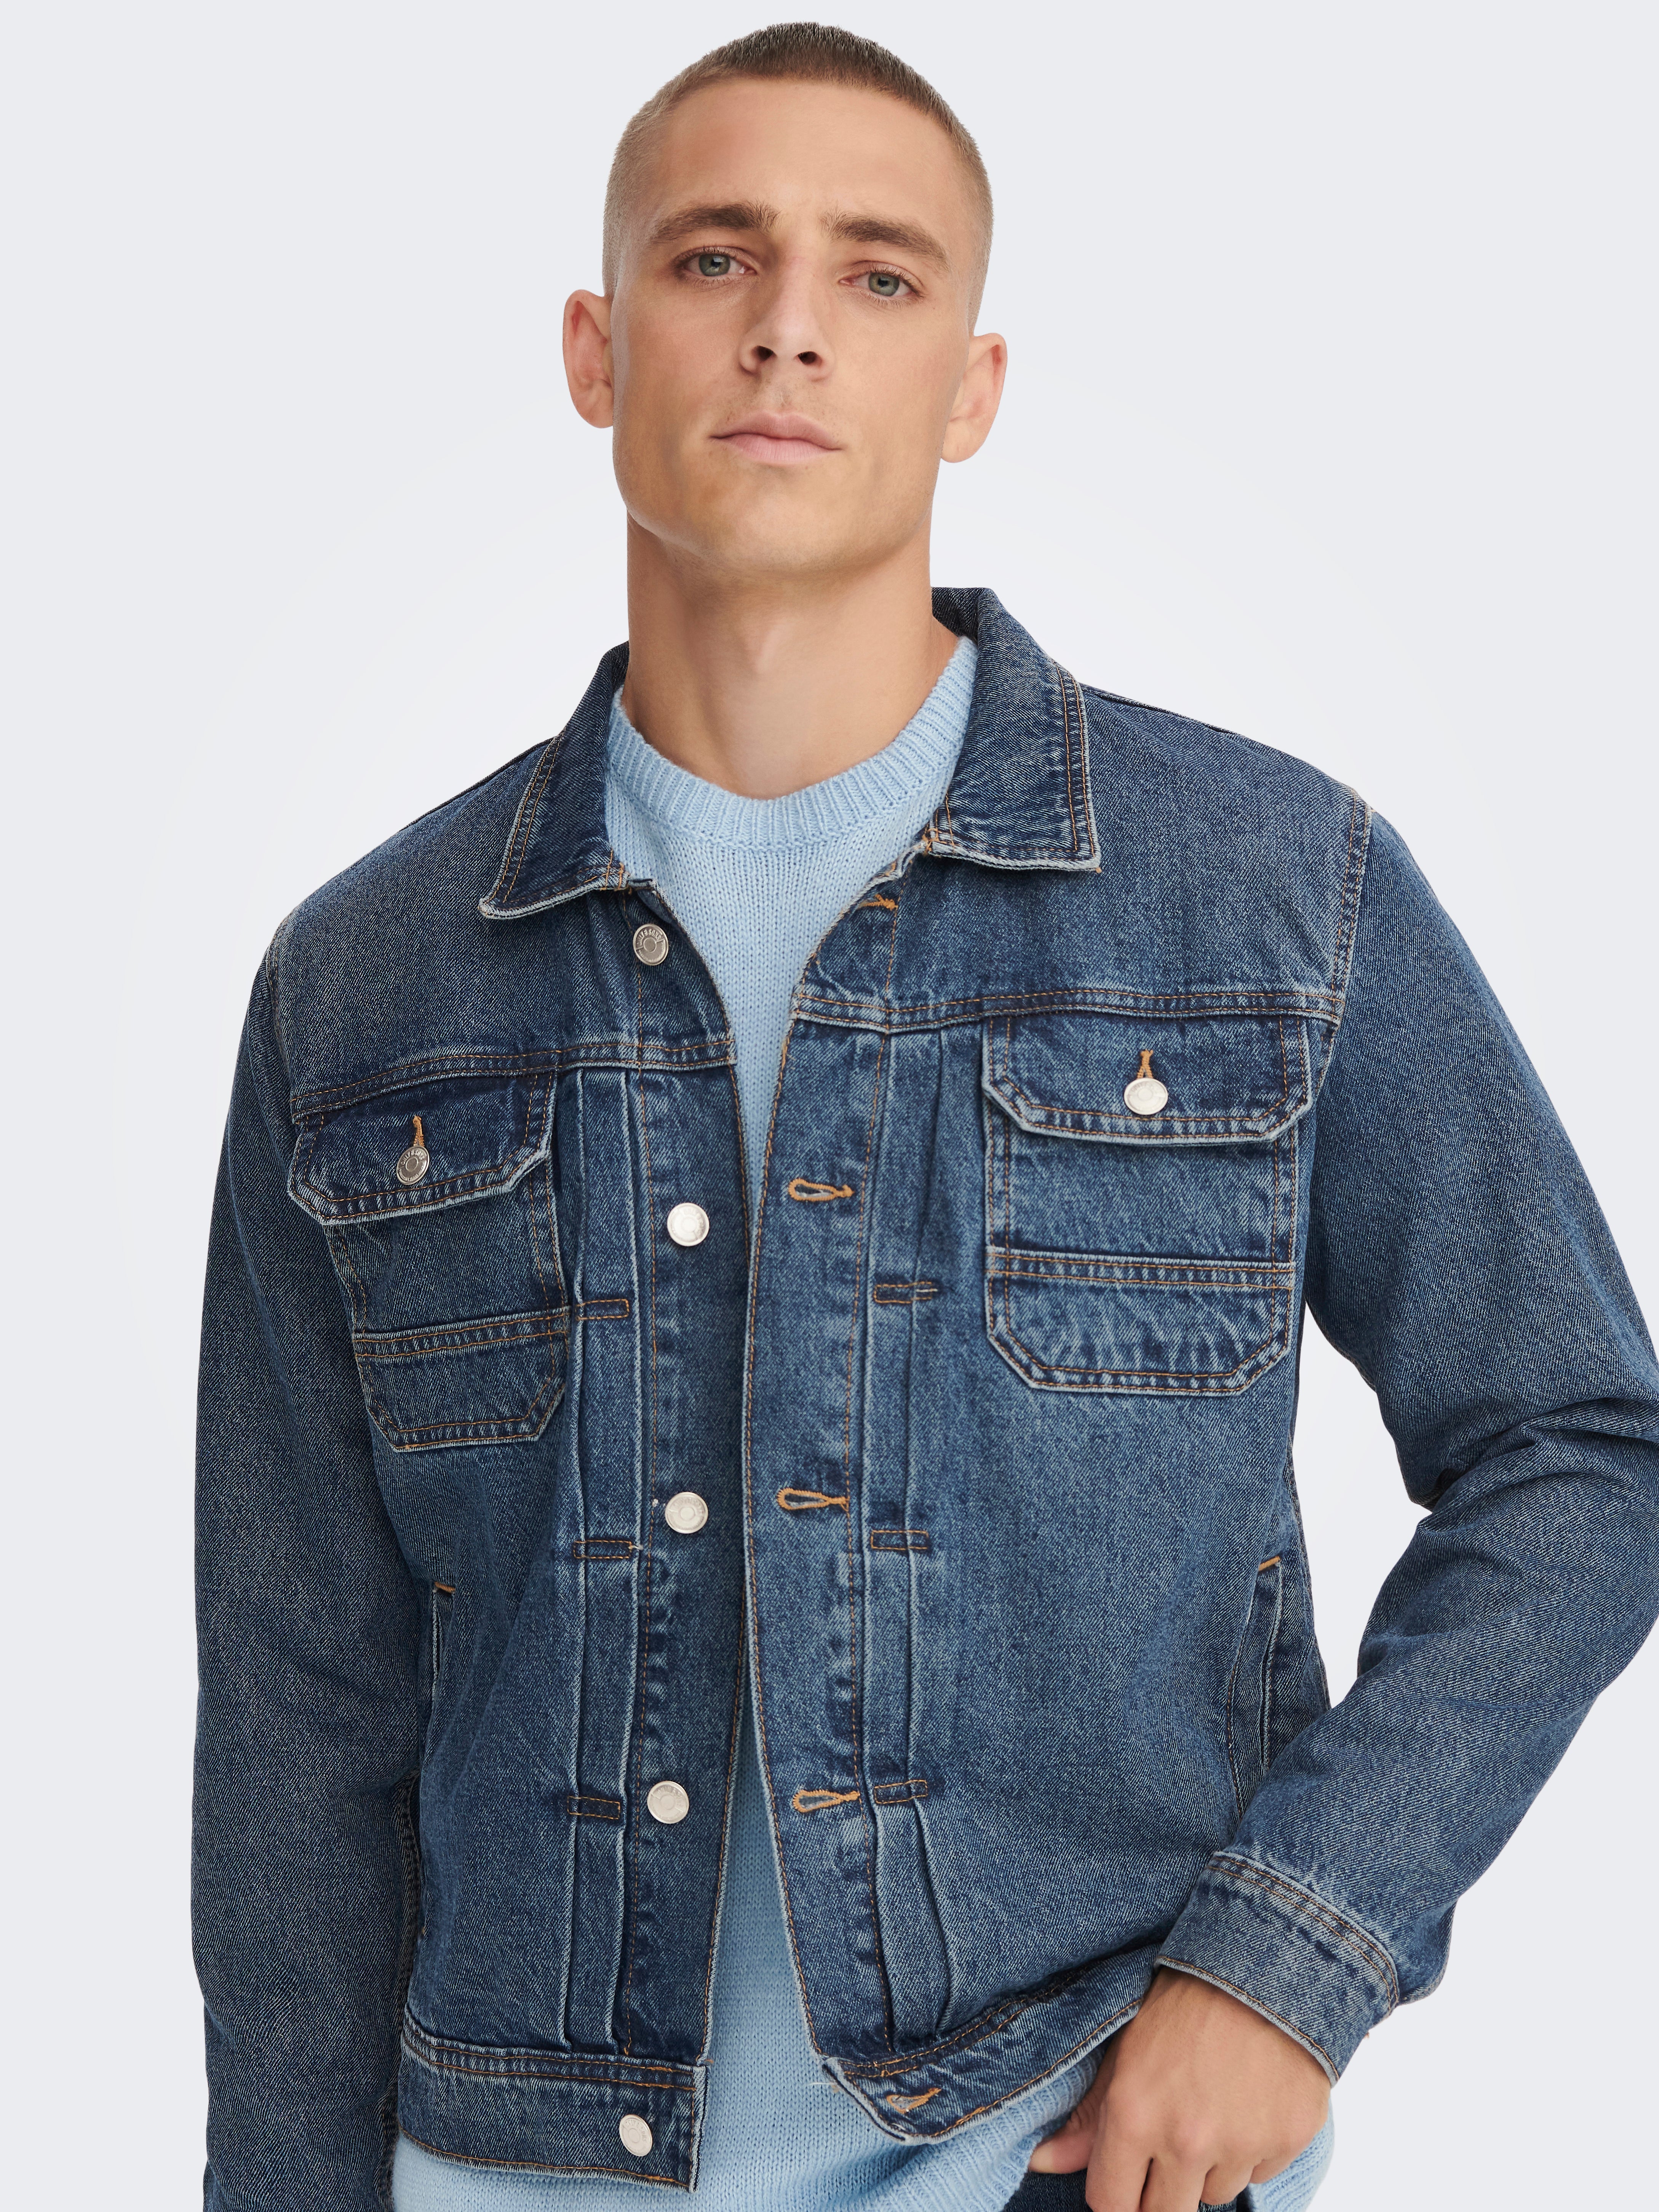 Buy Levi's Men's Solid Navy Blue High Neck Jacket online